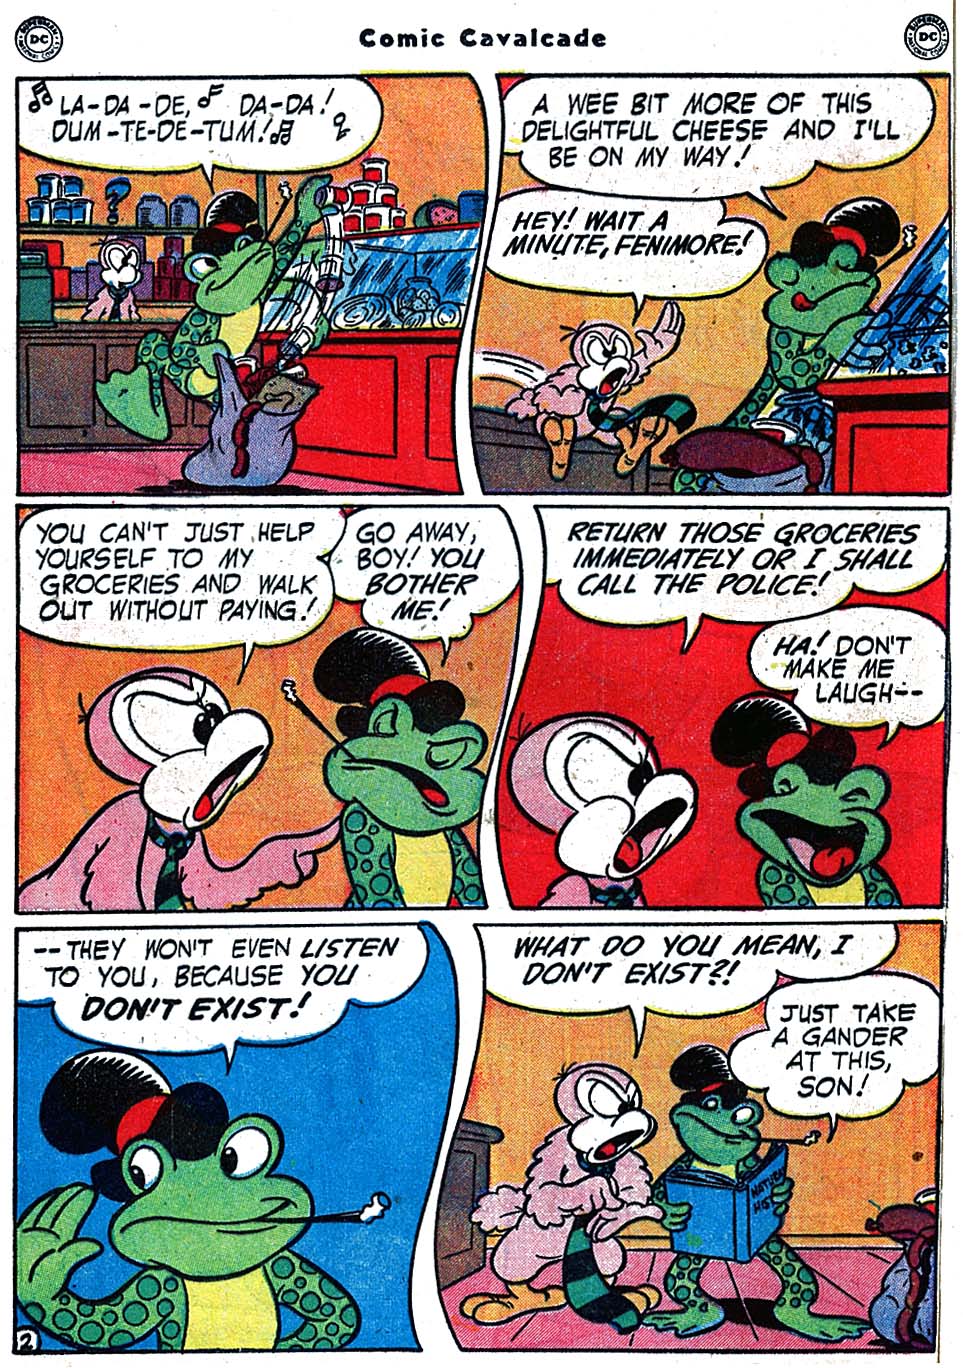 Comic Cavalcade issue 38 - Page 34